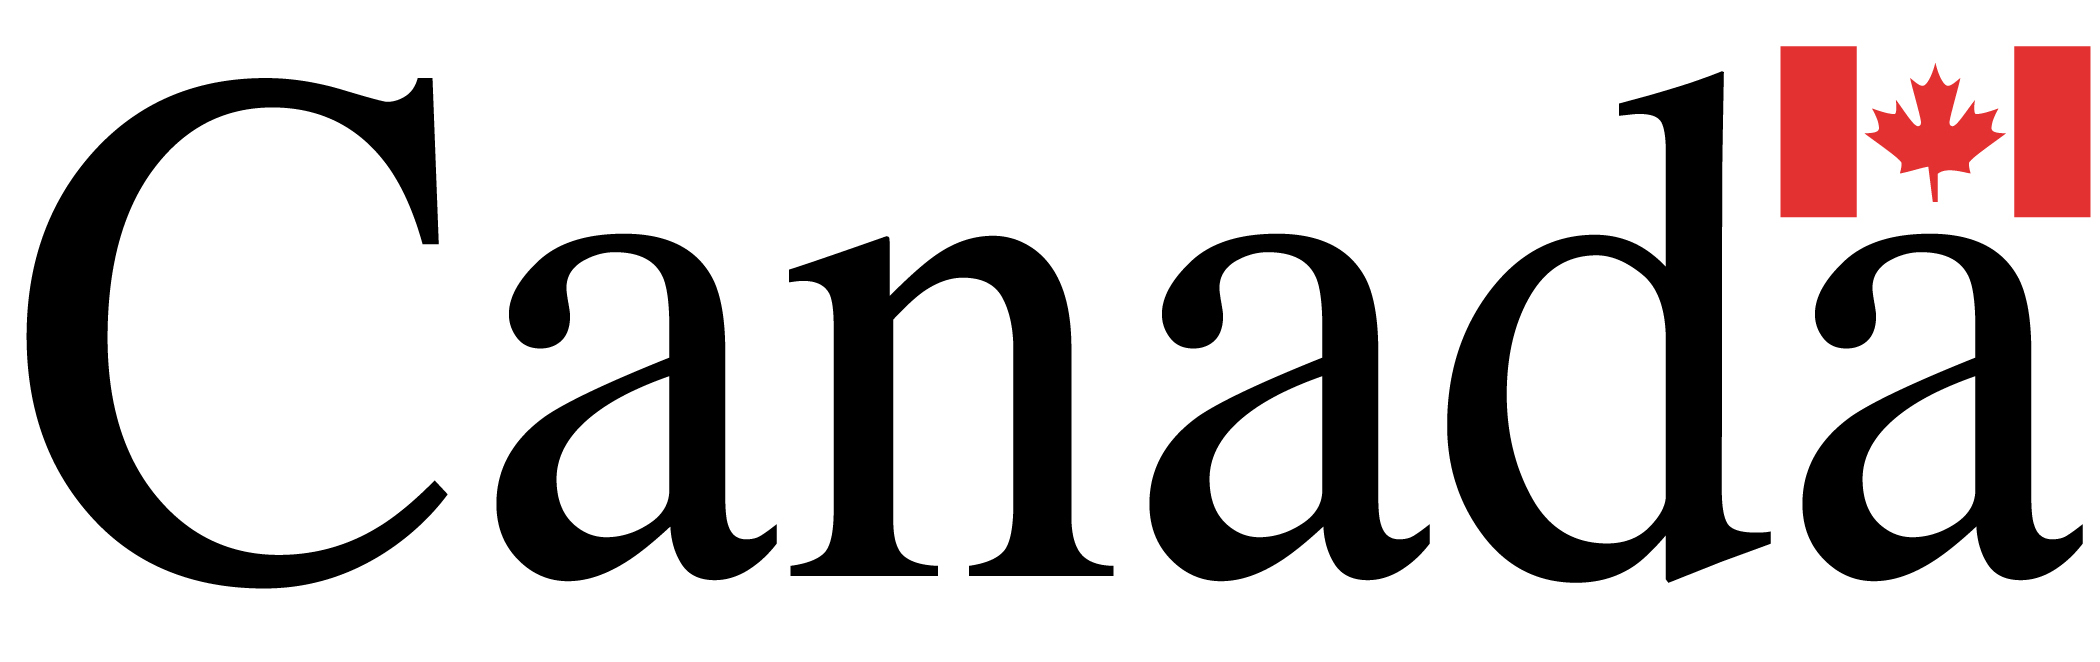 Canada Logo - GLOBE Capital